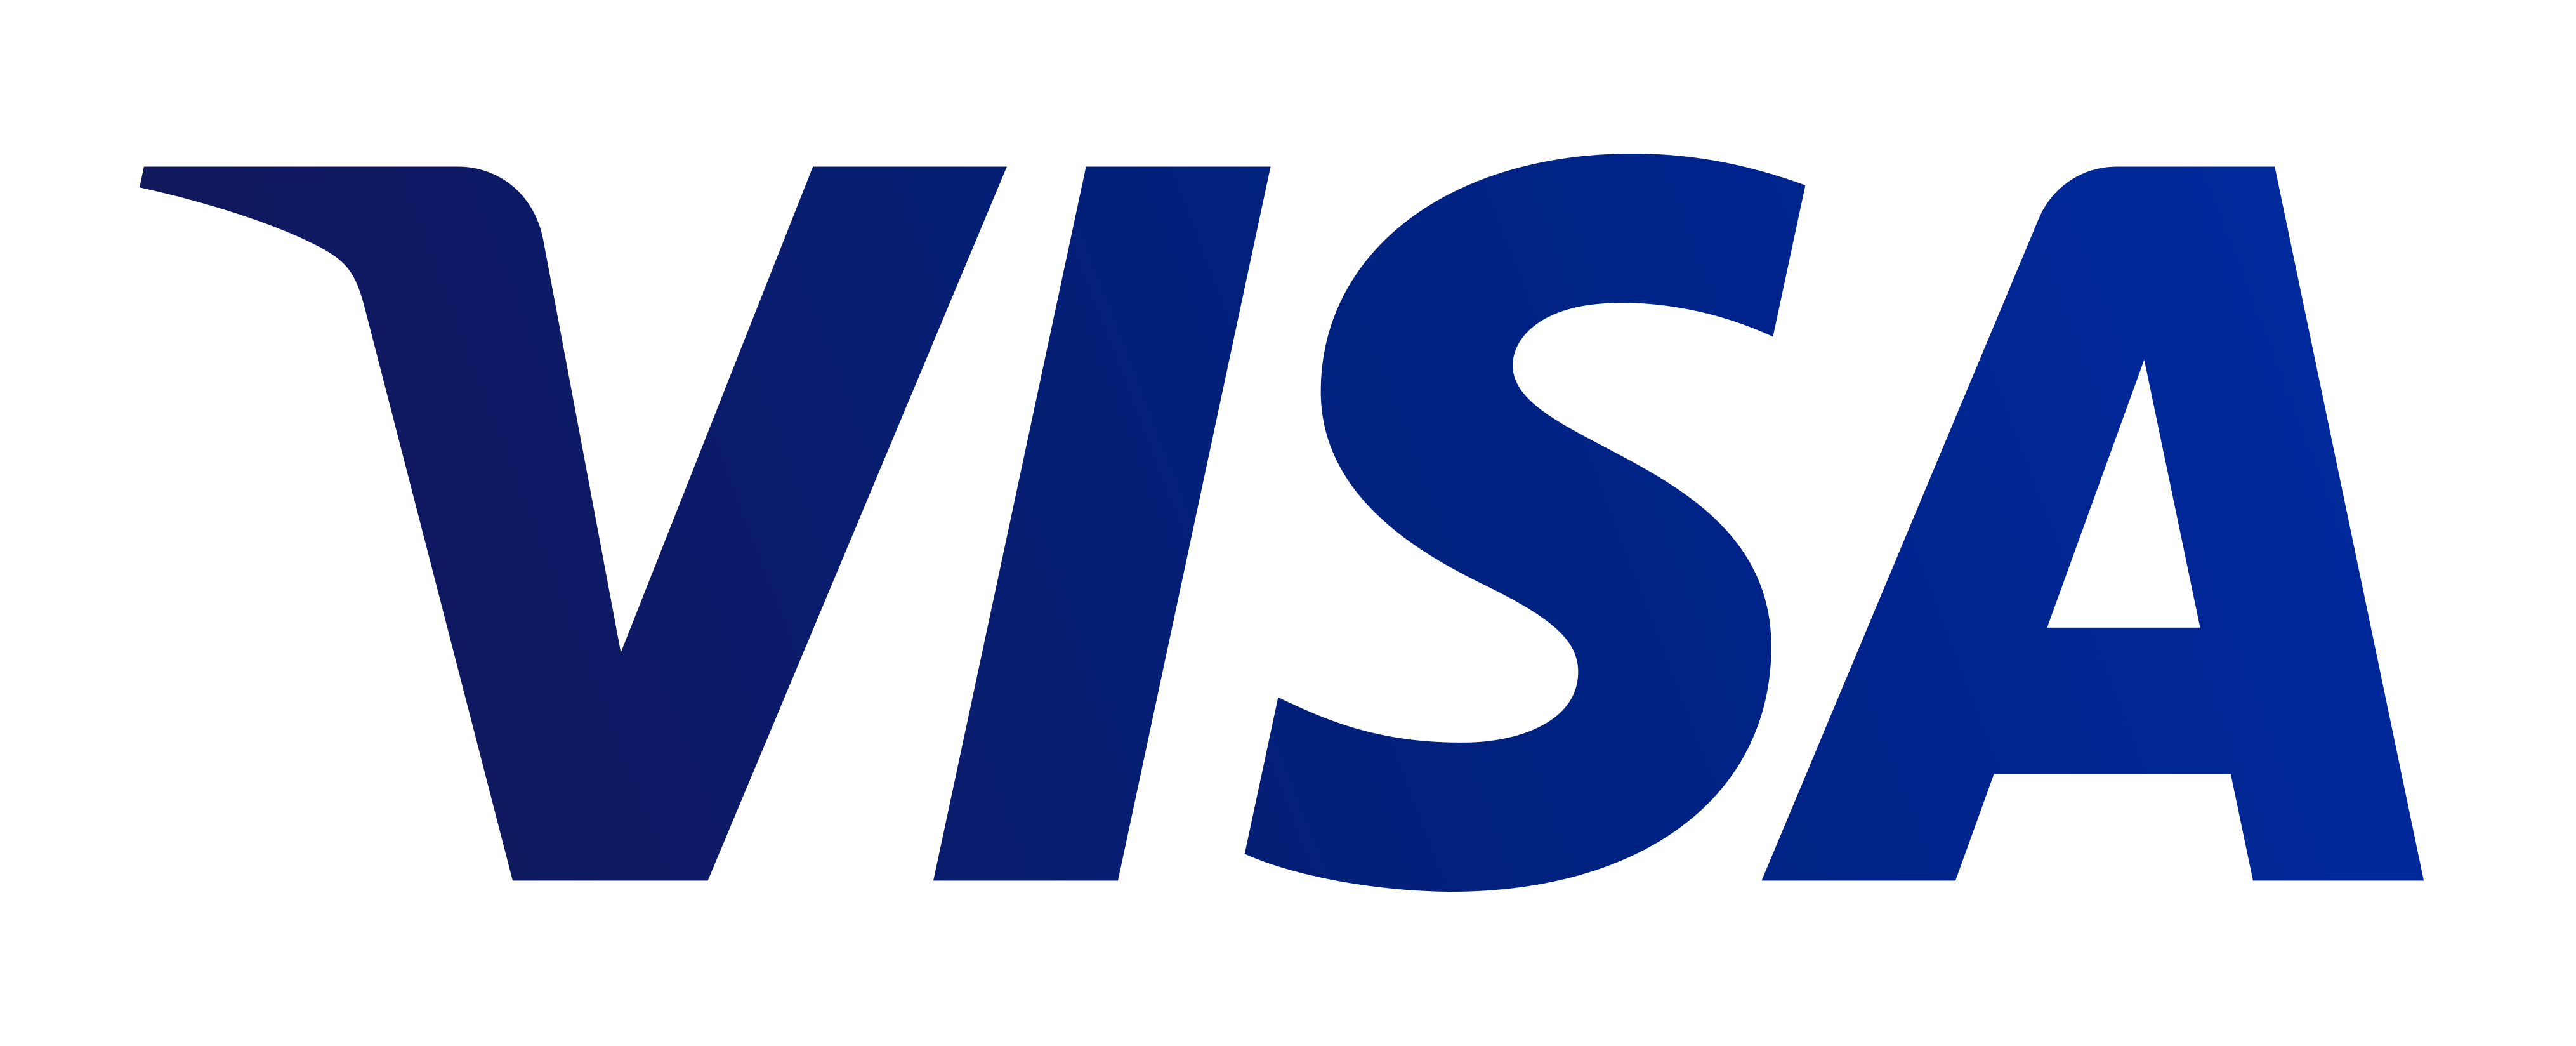 Download Visa Logo PNG Image for Free